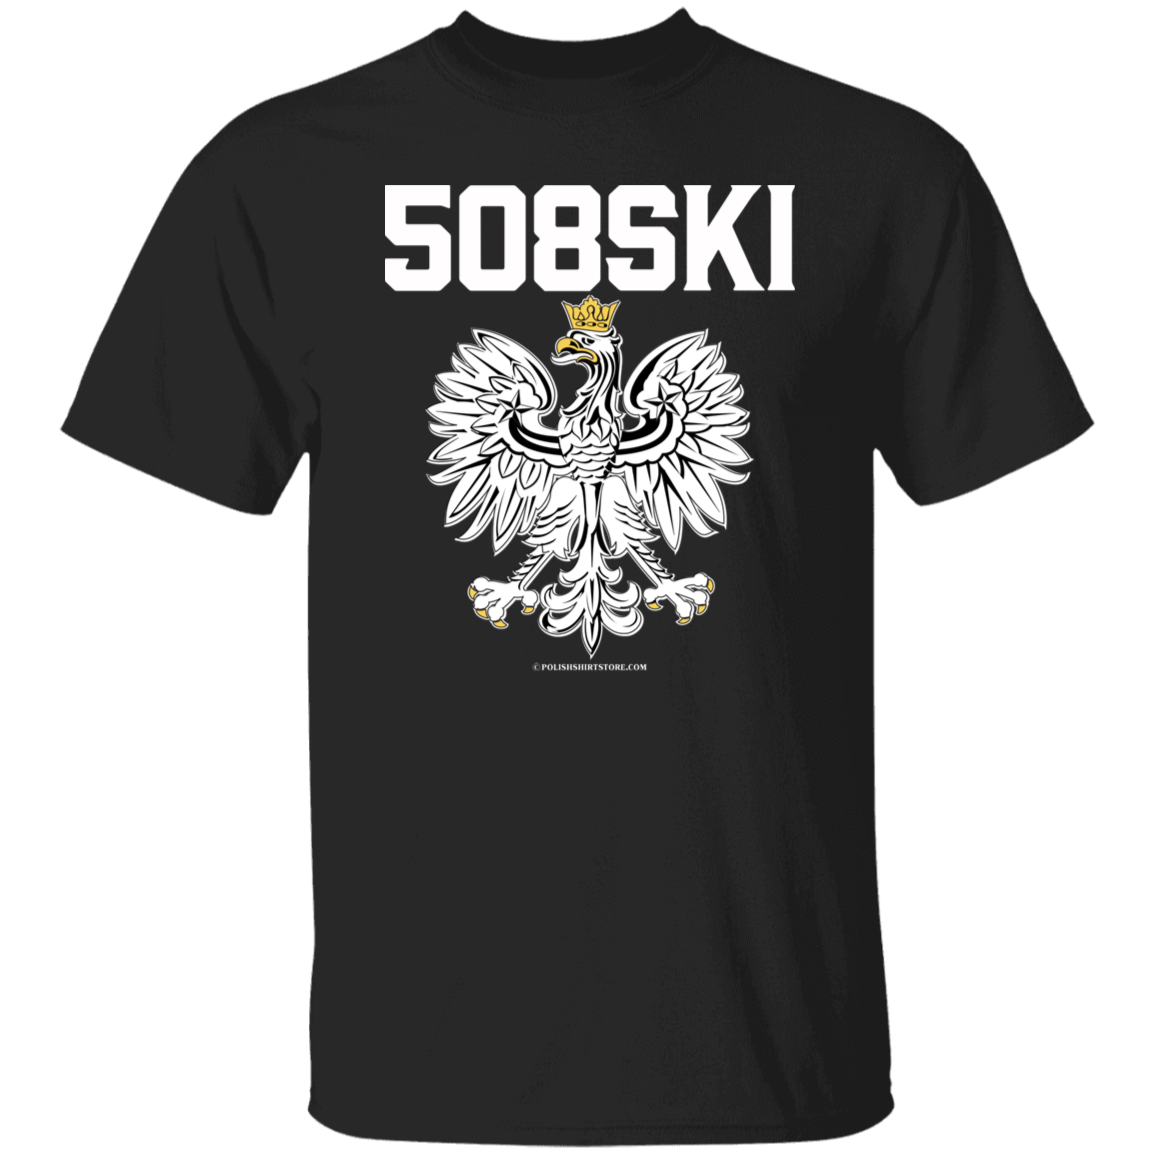 508SKI Apparel CustomCat G500 5.3 oz. T-Shirt Black S